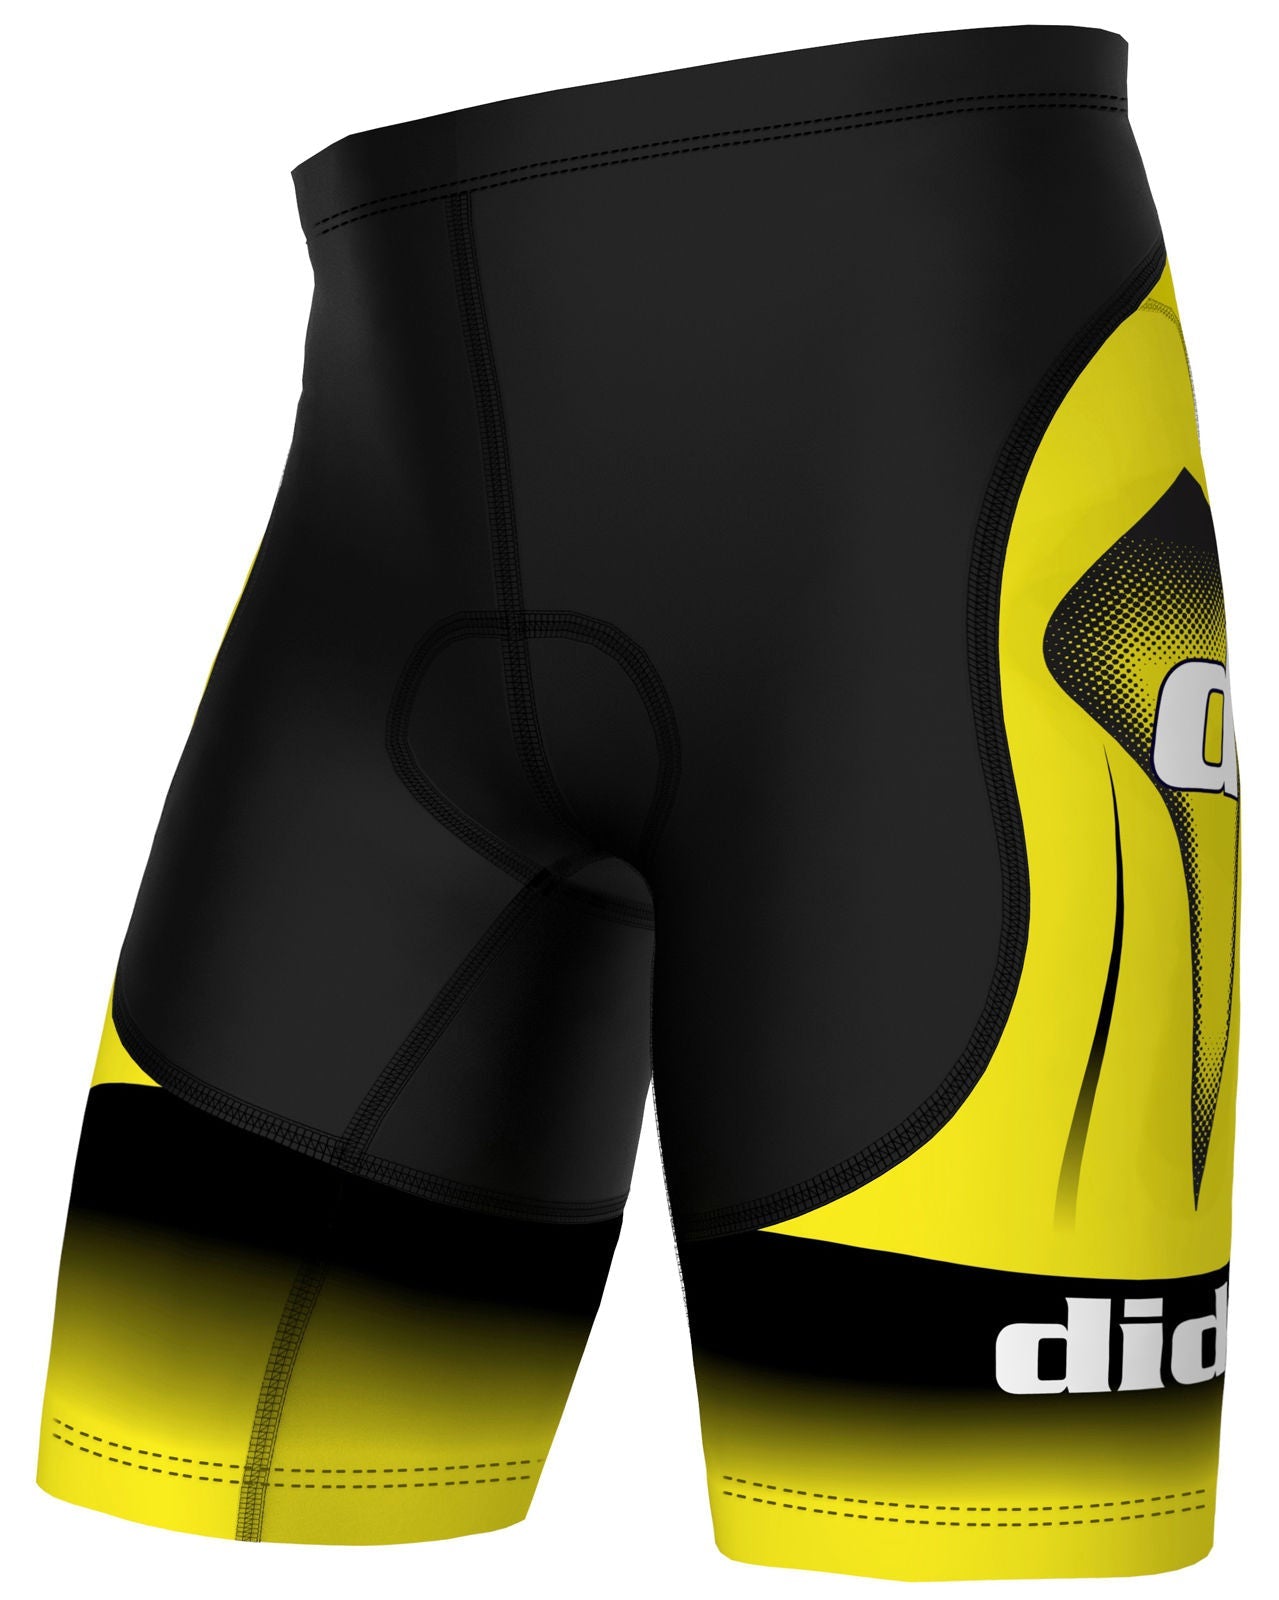 Yellow and Black Padded Cycling Shorts